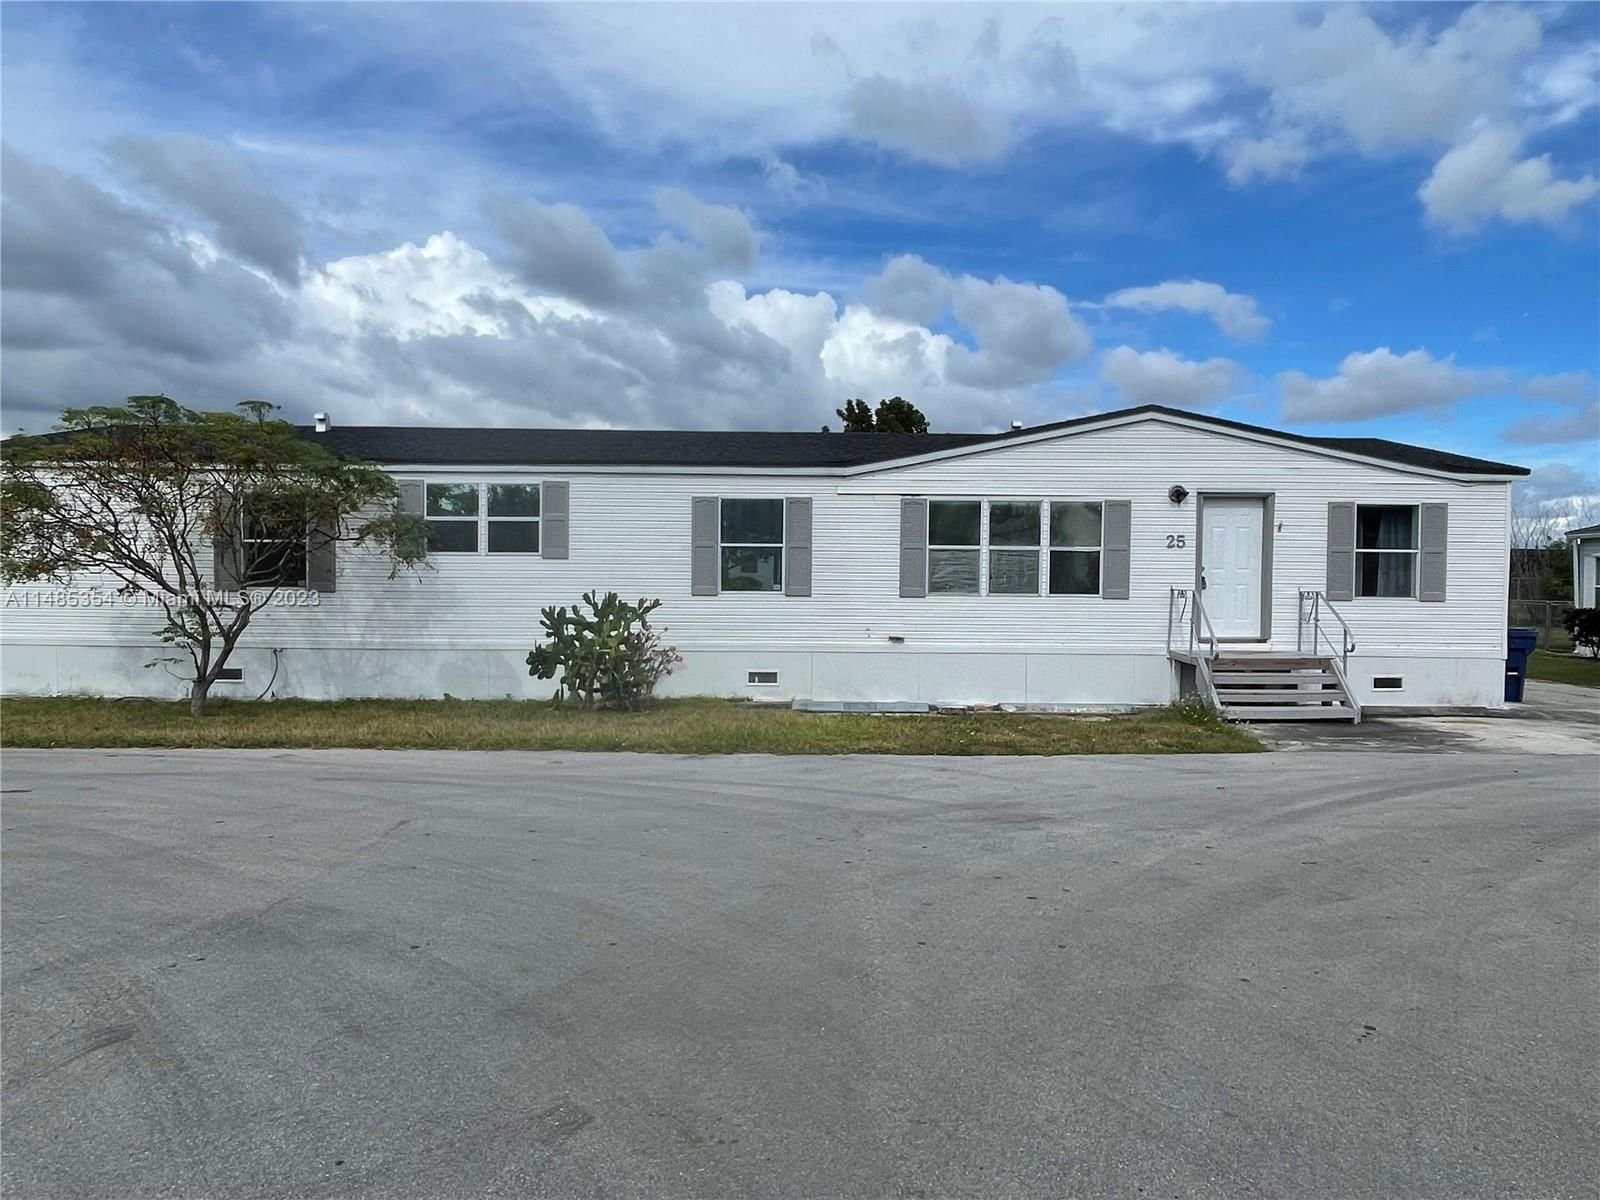 Real estate property located at 19800 180th Ave unit 25, Miami-Dade County, Miami, FL